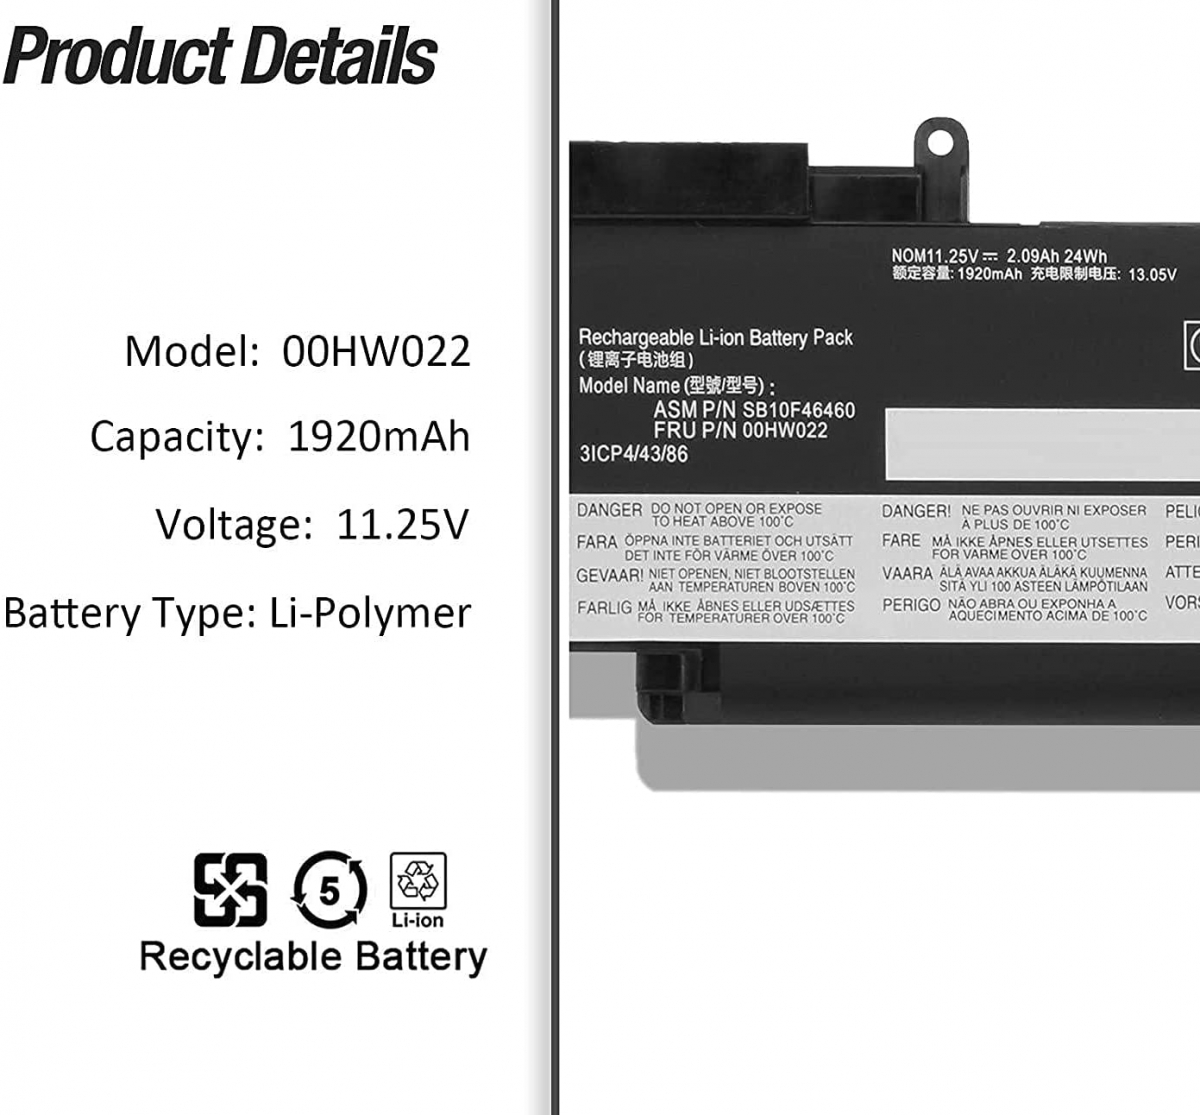 Bateria-CPY do T460s, bateria de laptop, adaptador de laptop, carregador de laptop, bateria Dell, bateria Apple, bateria HP